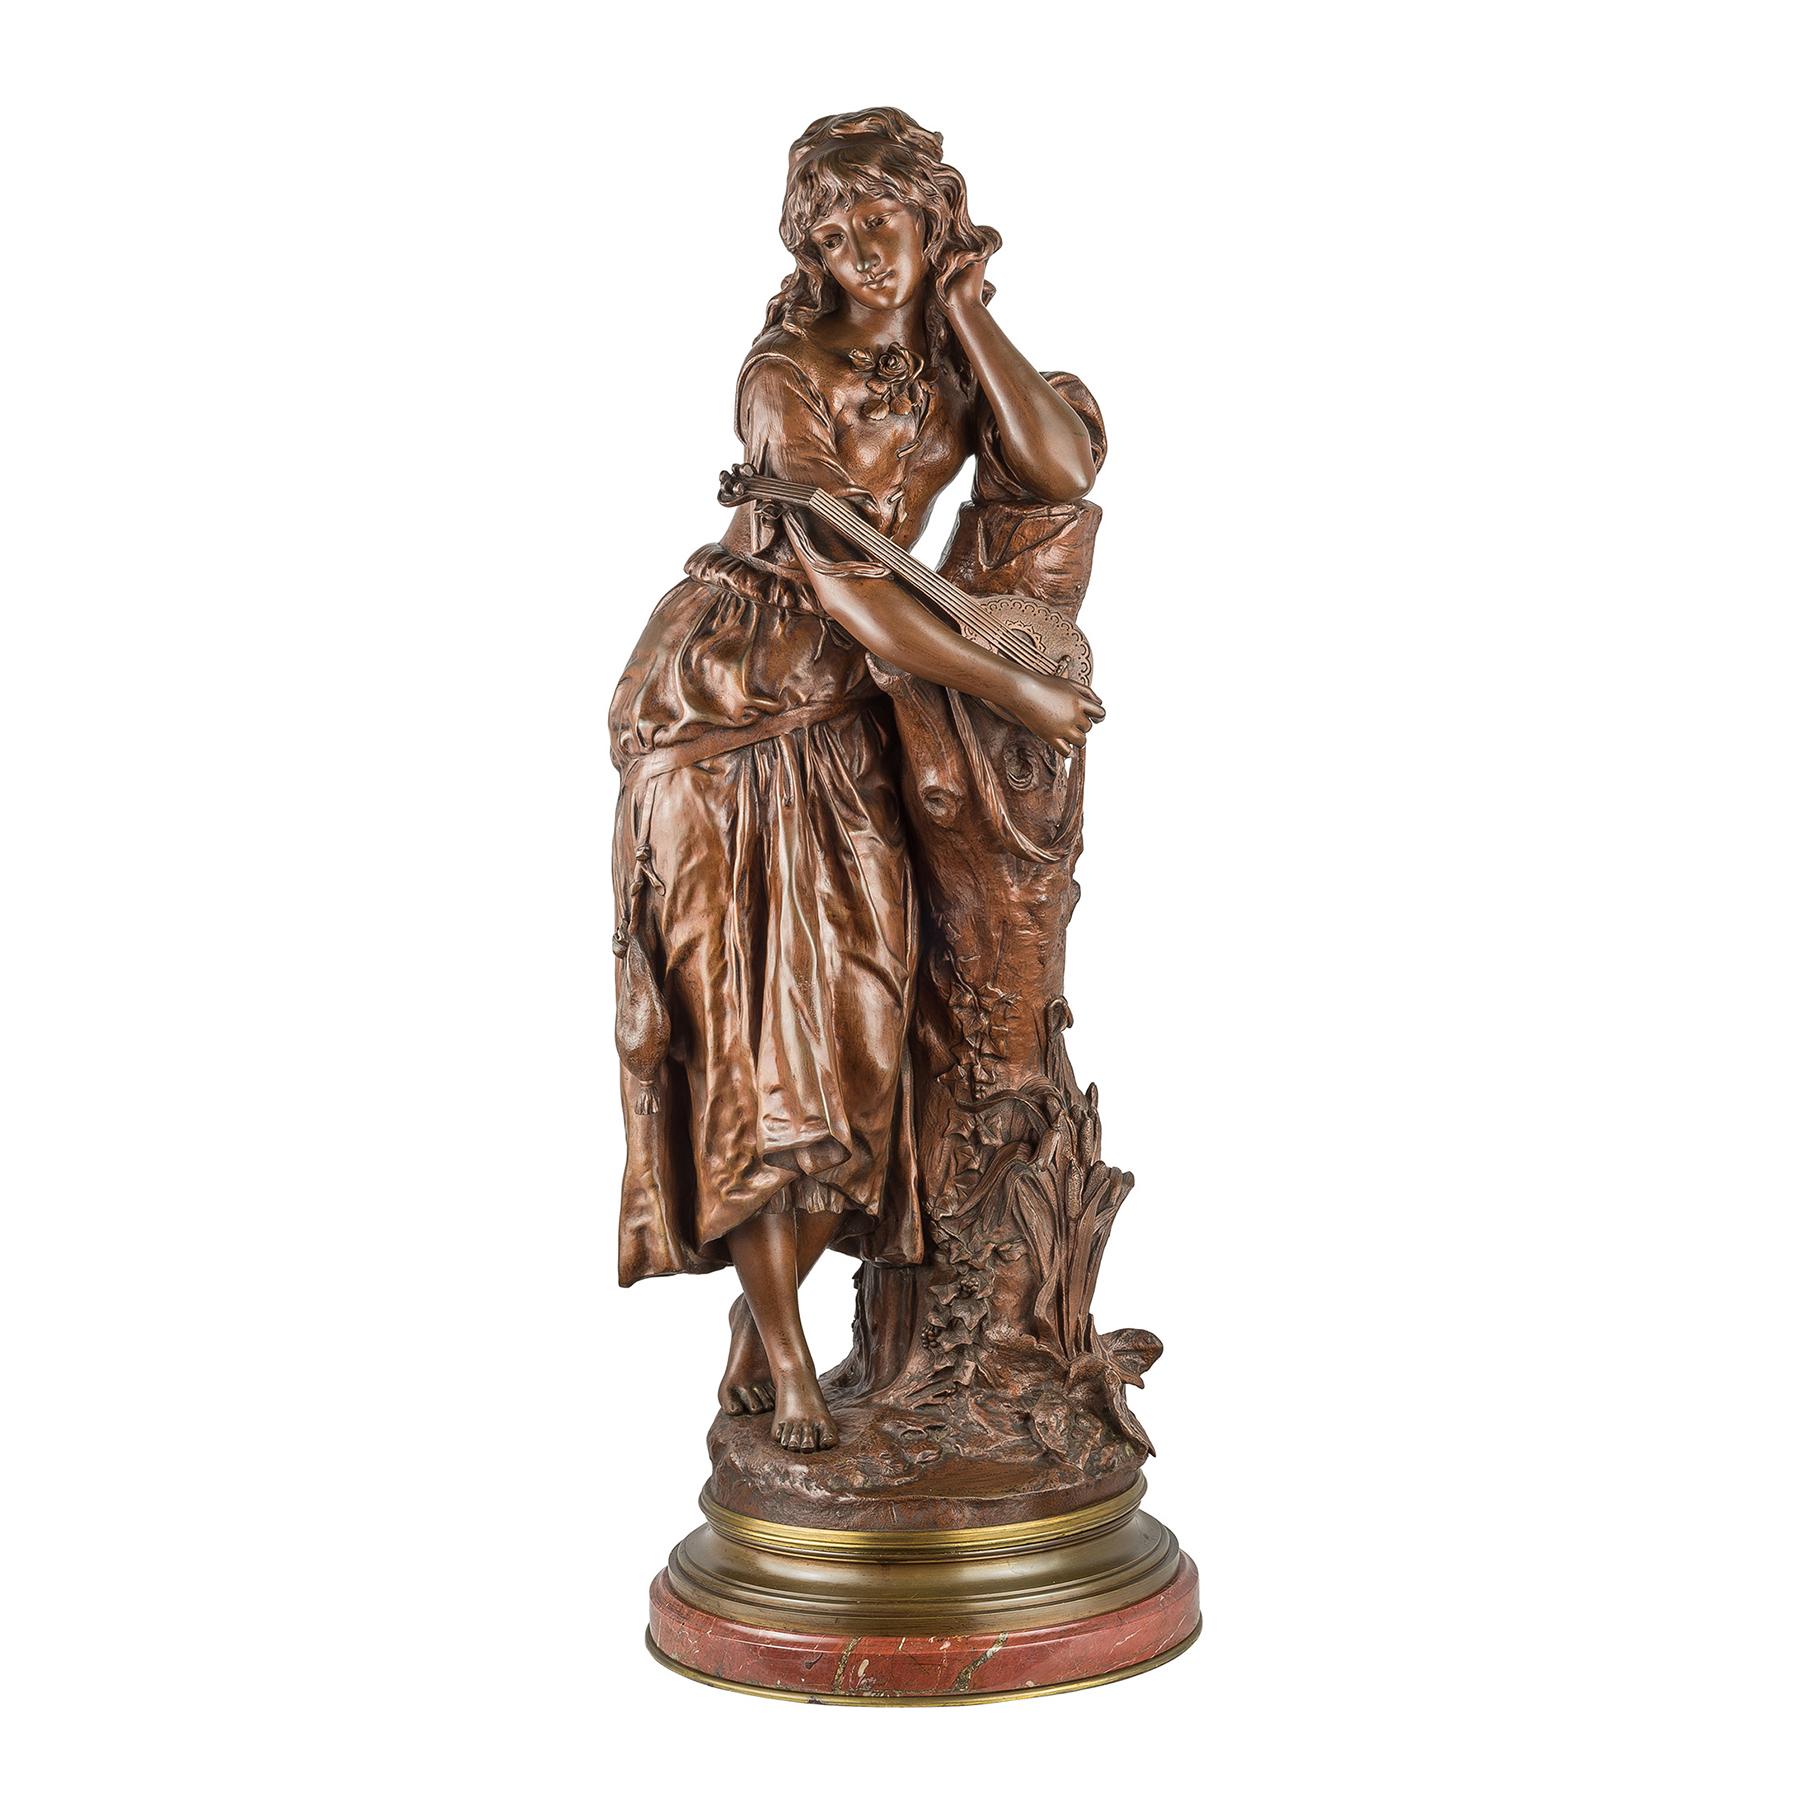 Adrien Étienne Gaudez Still-Life Sculpture - Maiden with a Lute, Patinated Bronze Sculpture by Adrien Etienne Gaudez